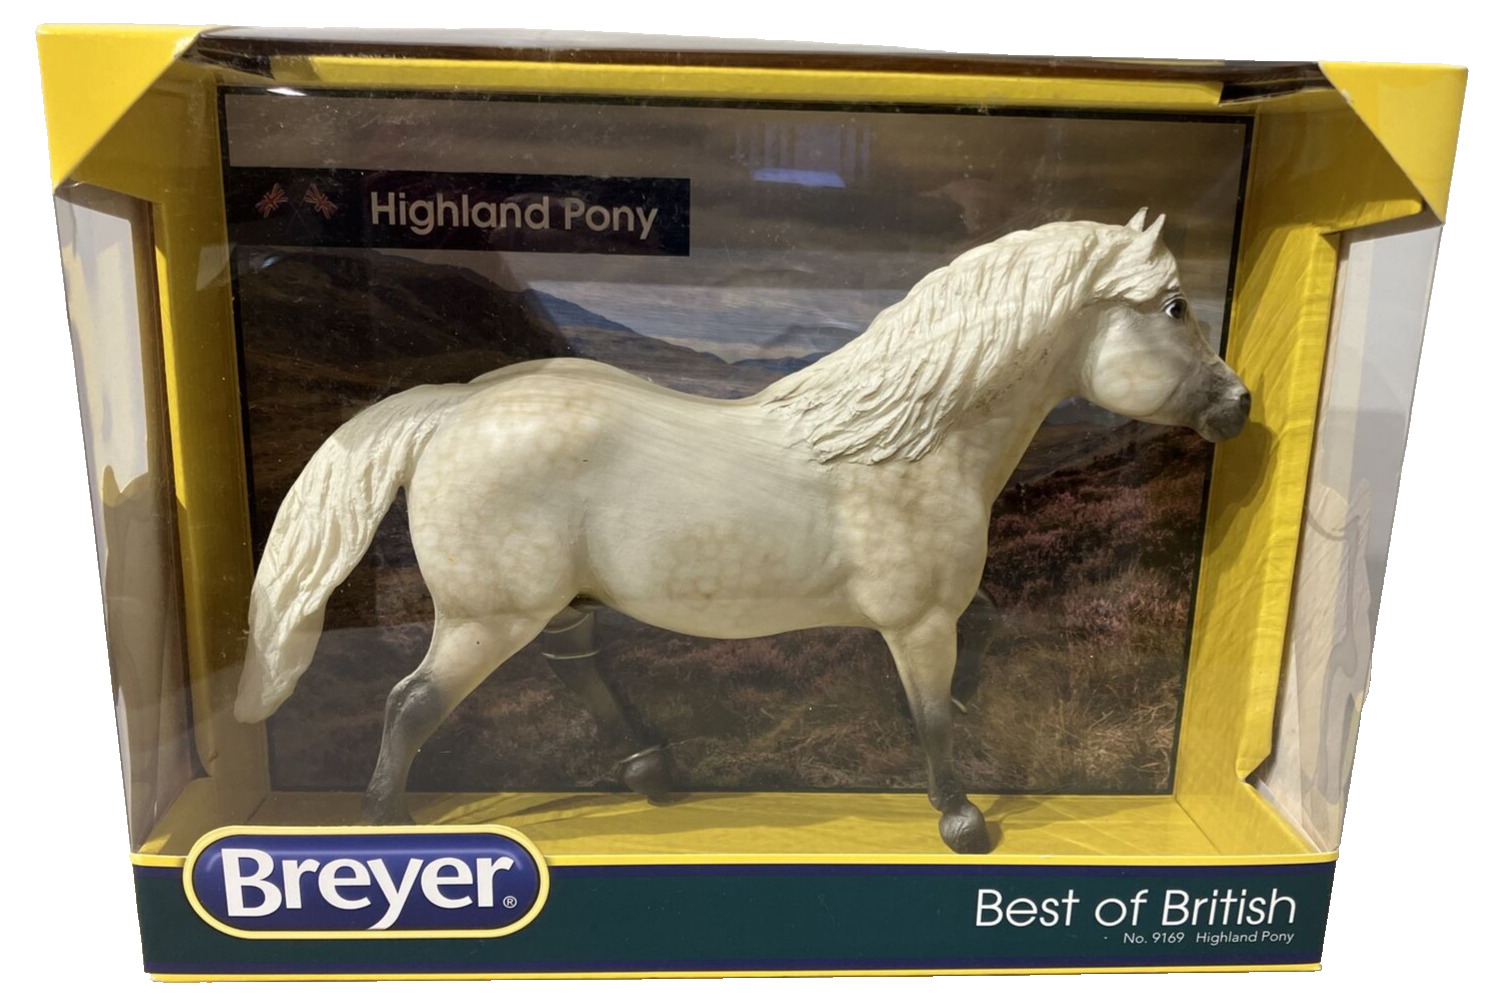 New Breyer Horse #9169 Best of British Highland Pony Dapple Grey Haflinger